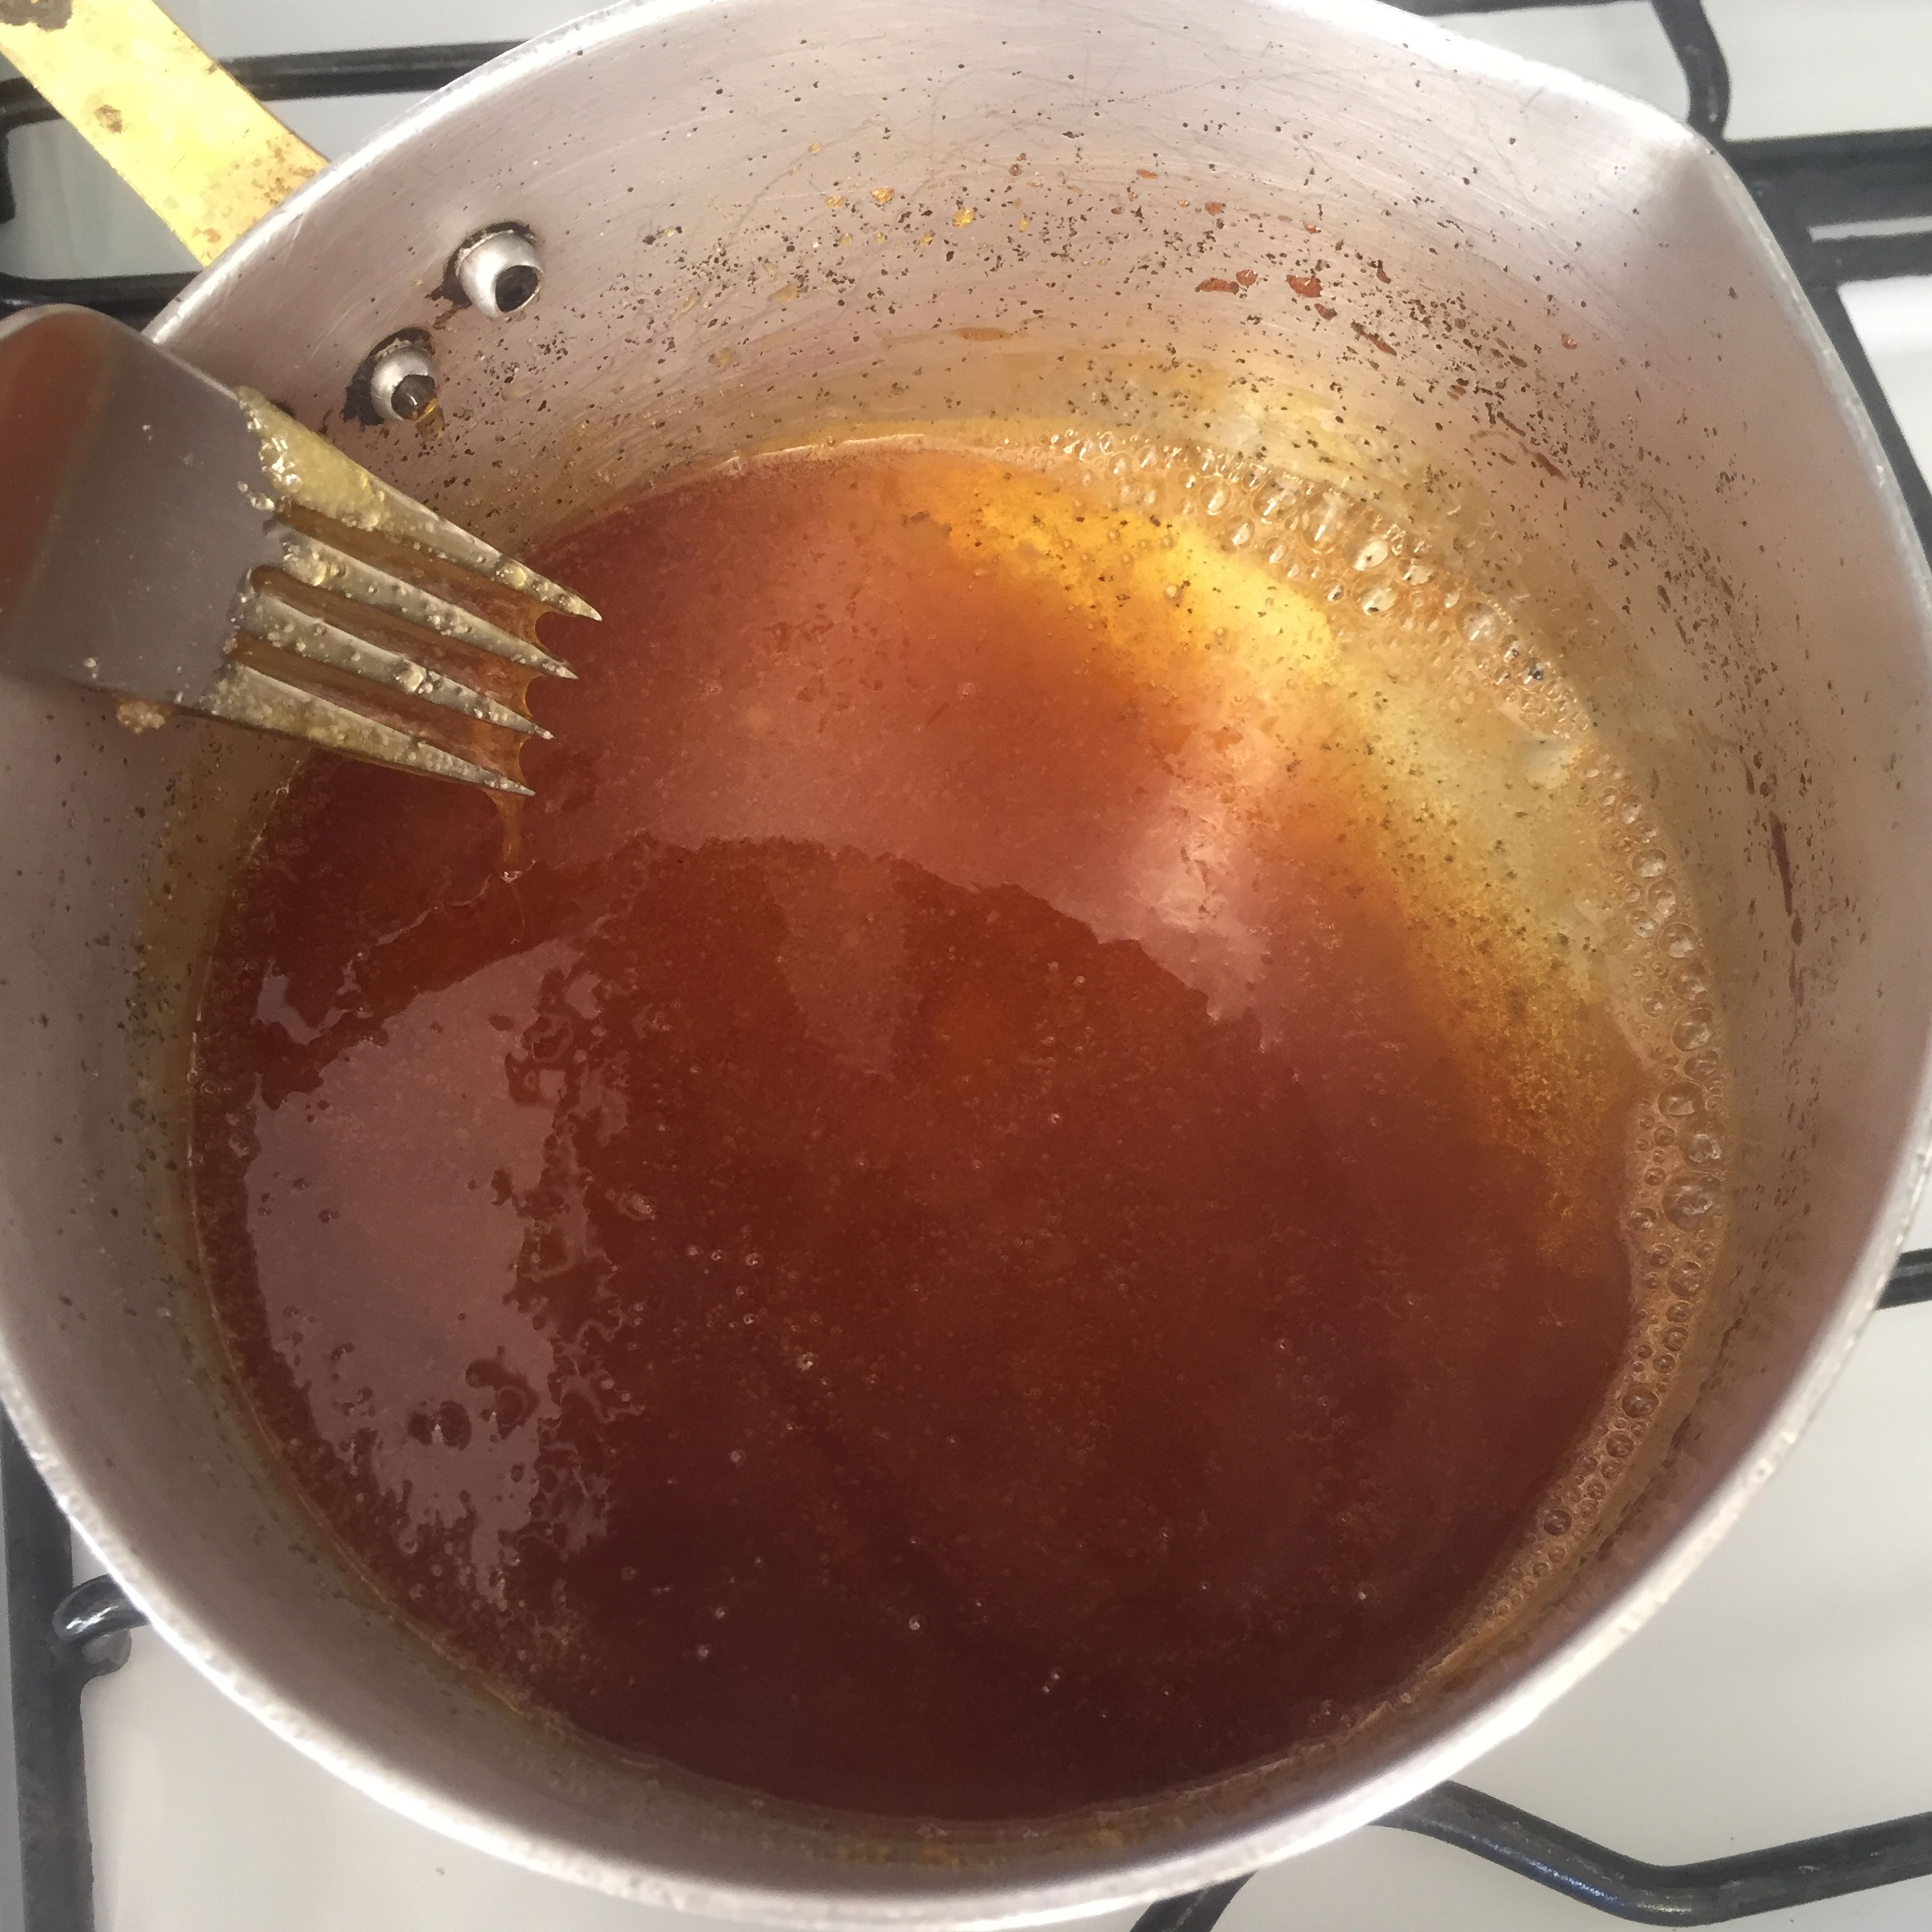 Stir sugar occacionally until it reaches a golden, liquid consistence